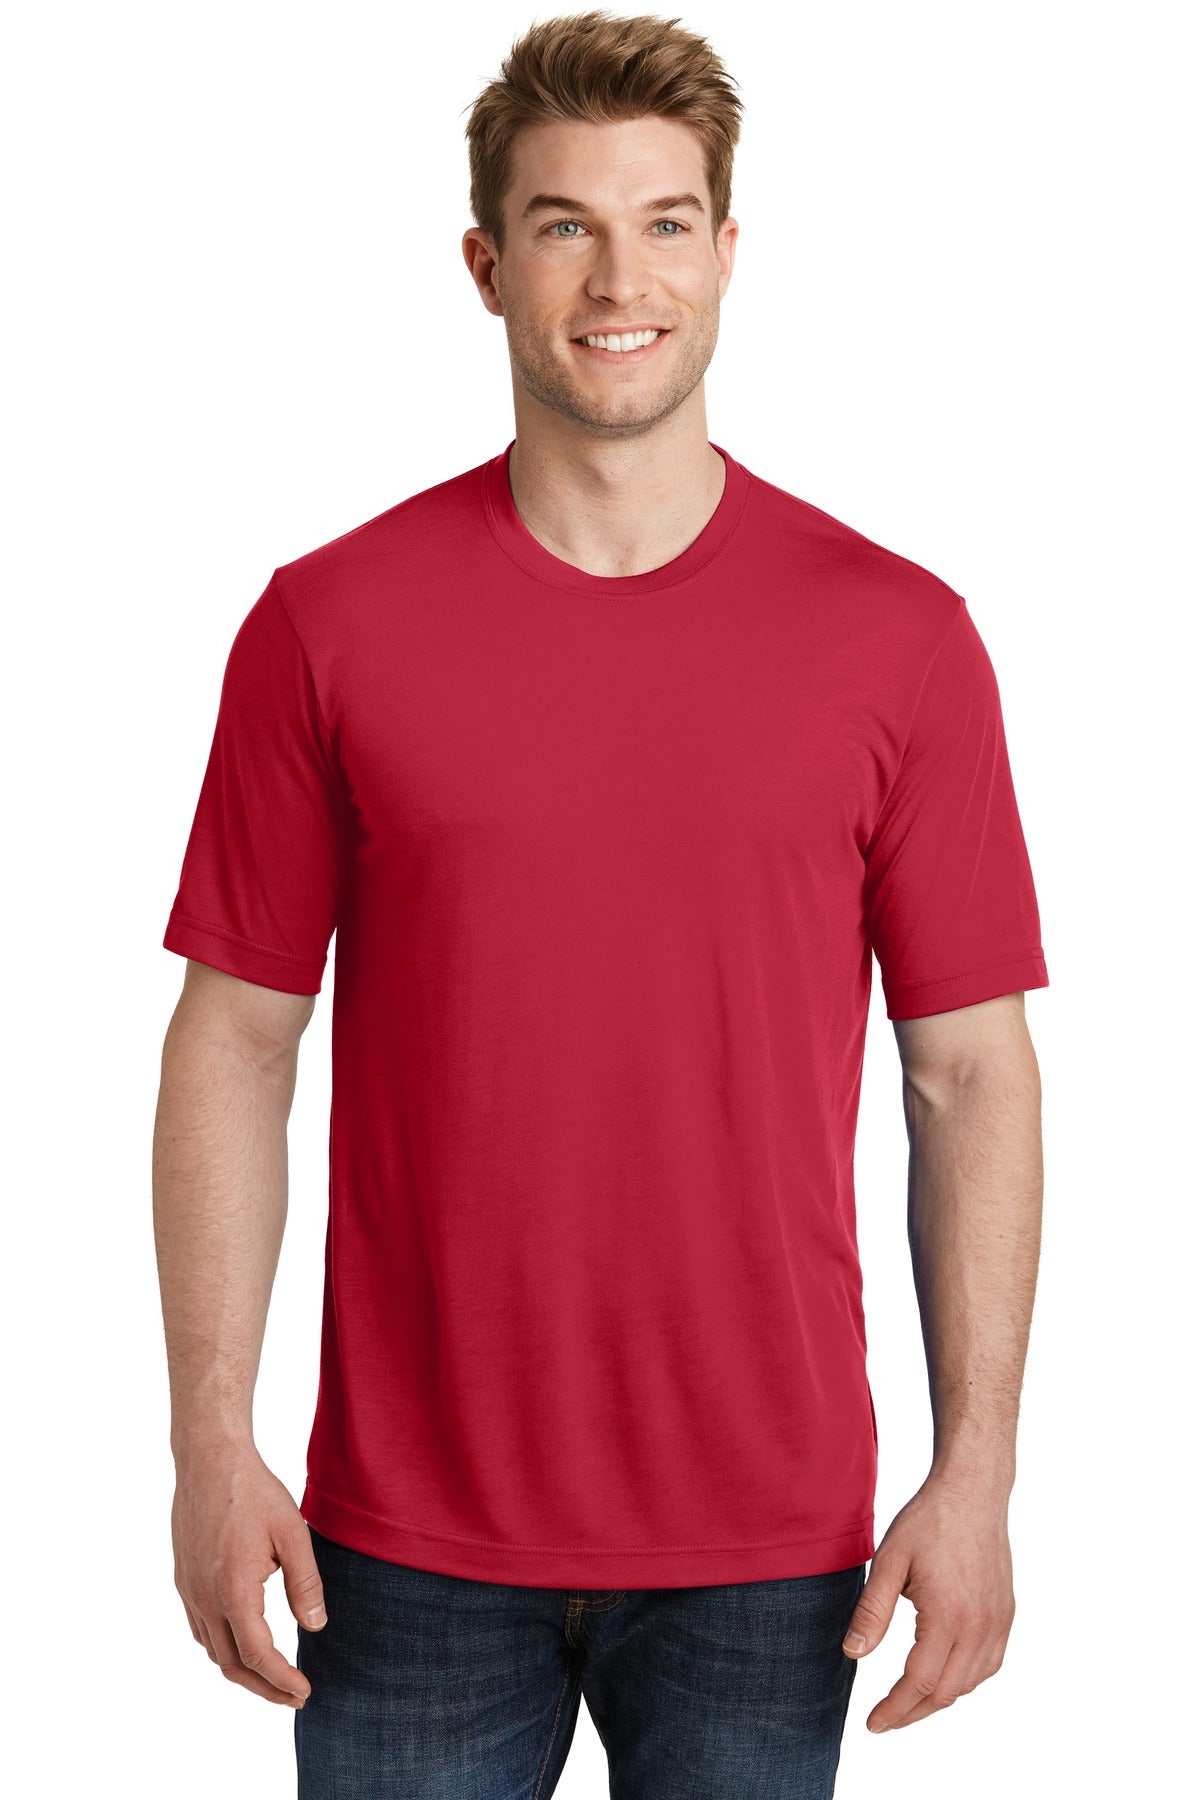 Photo of Sport-Tek T-Shirts ST450  color  Deep Red